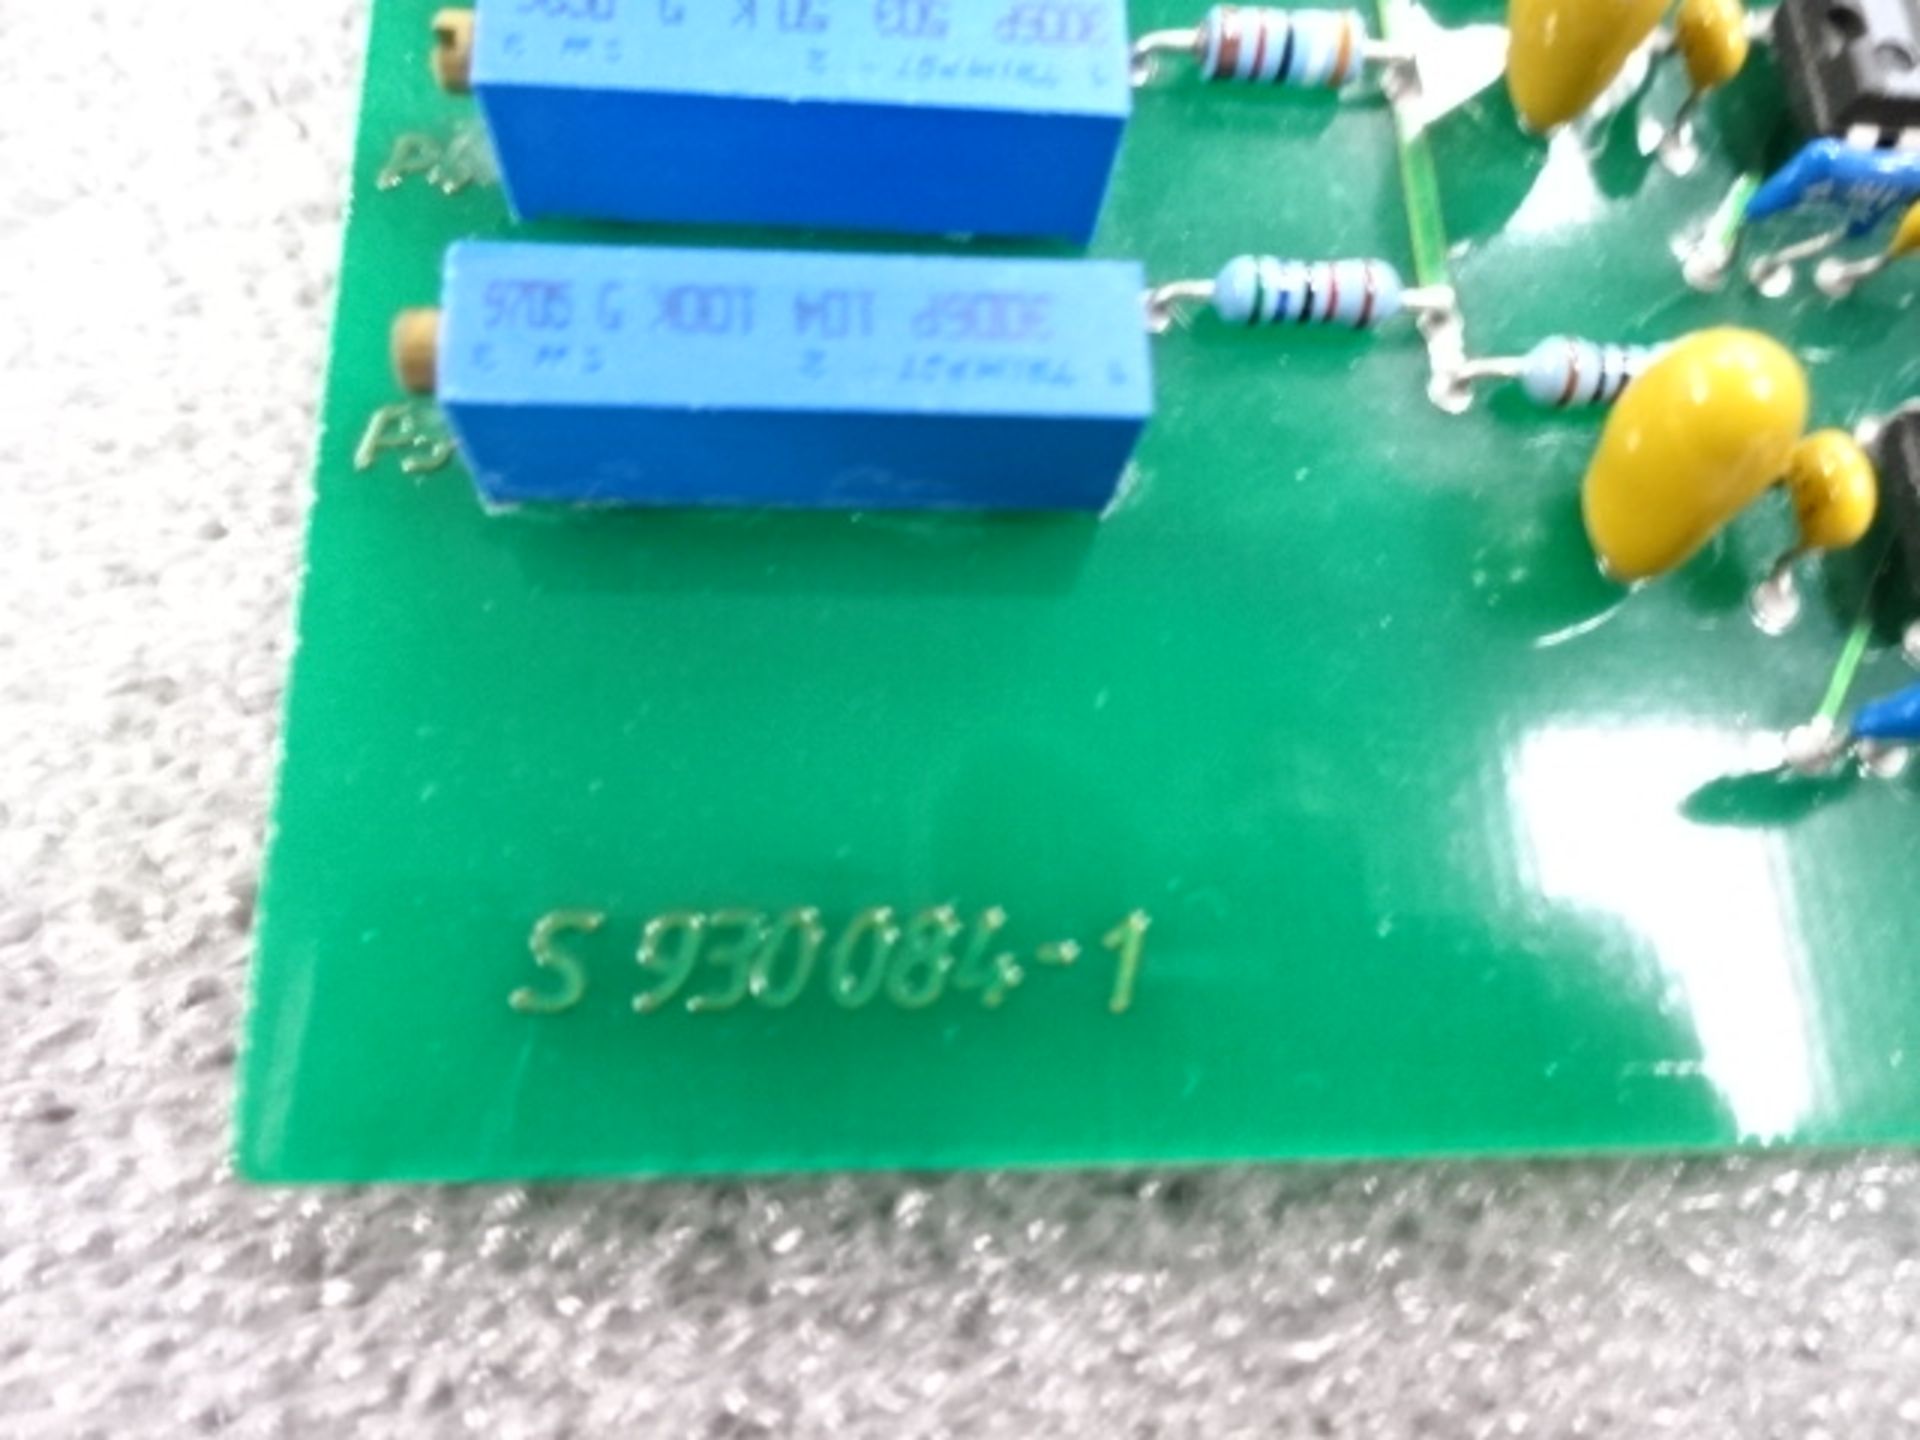 Circuit Imprimé - Electronic Board - Image 3 of 5